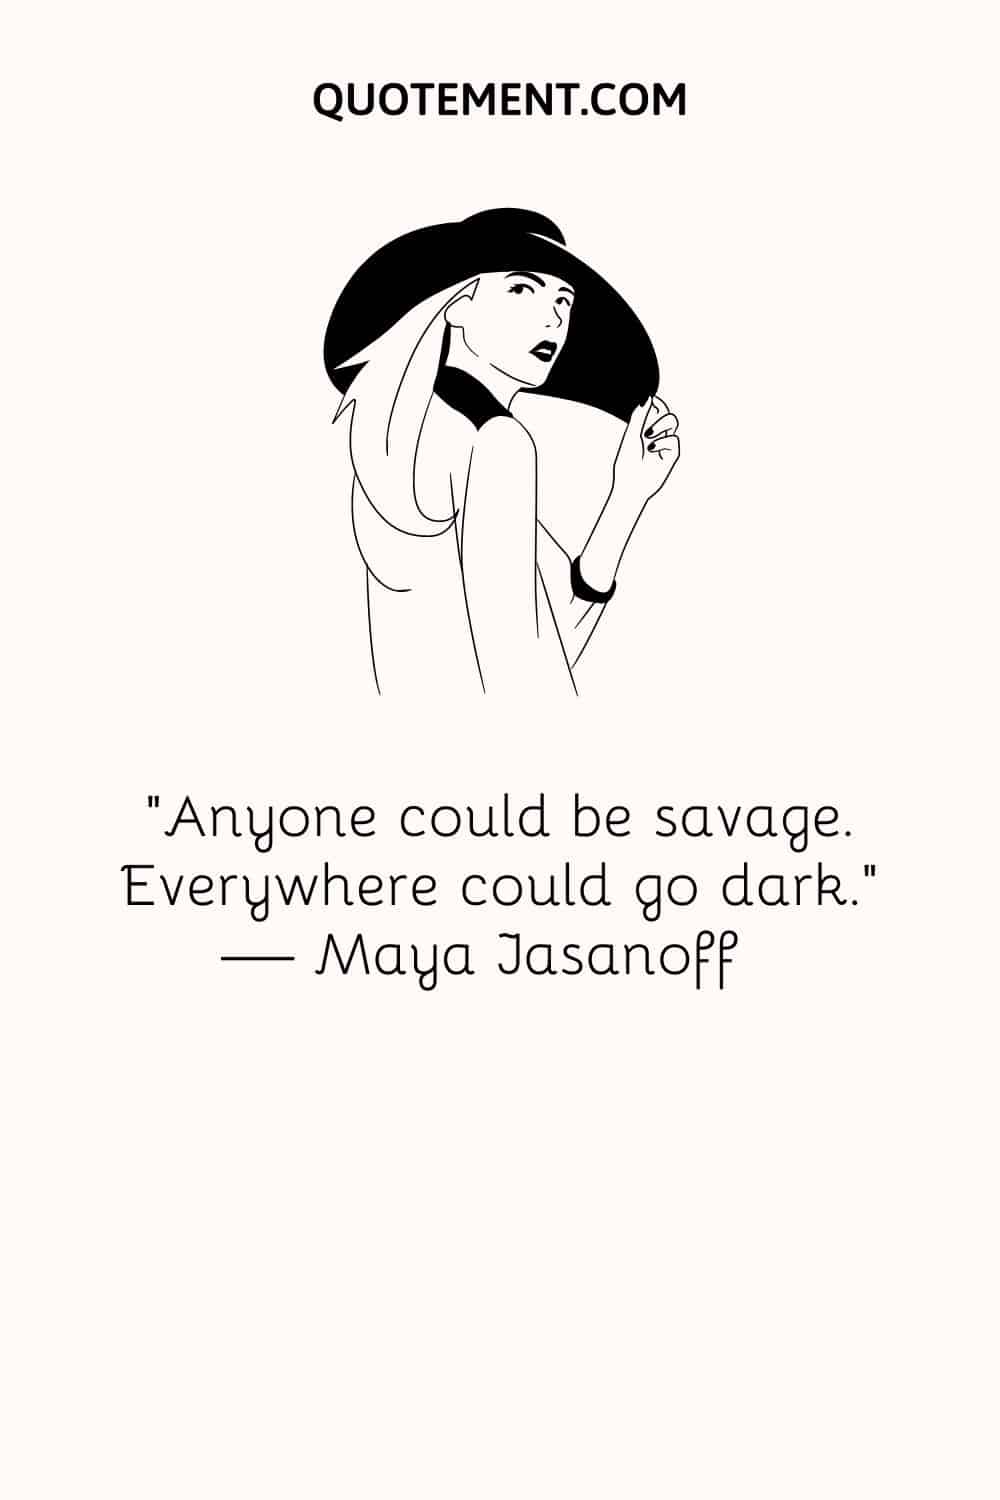 “Anyone could be savage. Everywhere could go dark.” — Maya Jasanoff